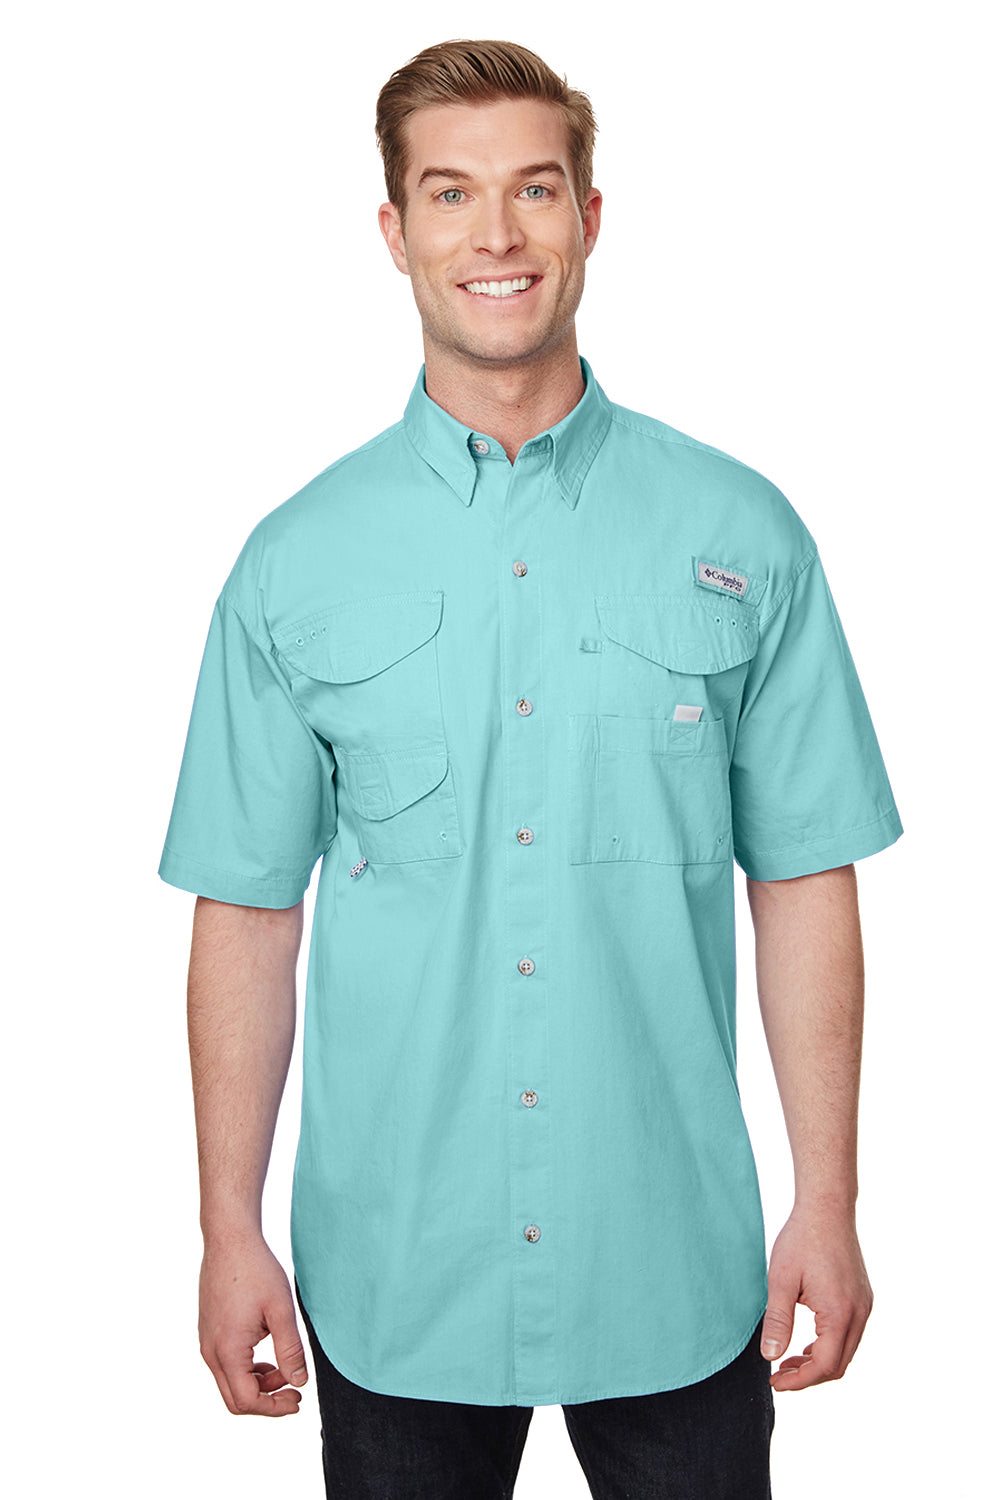 Men's PFG Bonehead™ Long Sleeve Shirt Big Columbia, 60% OFF